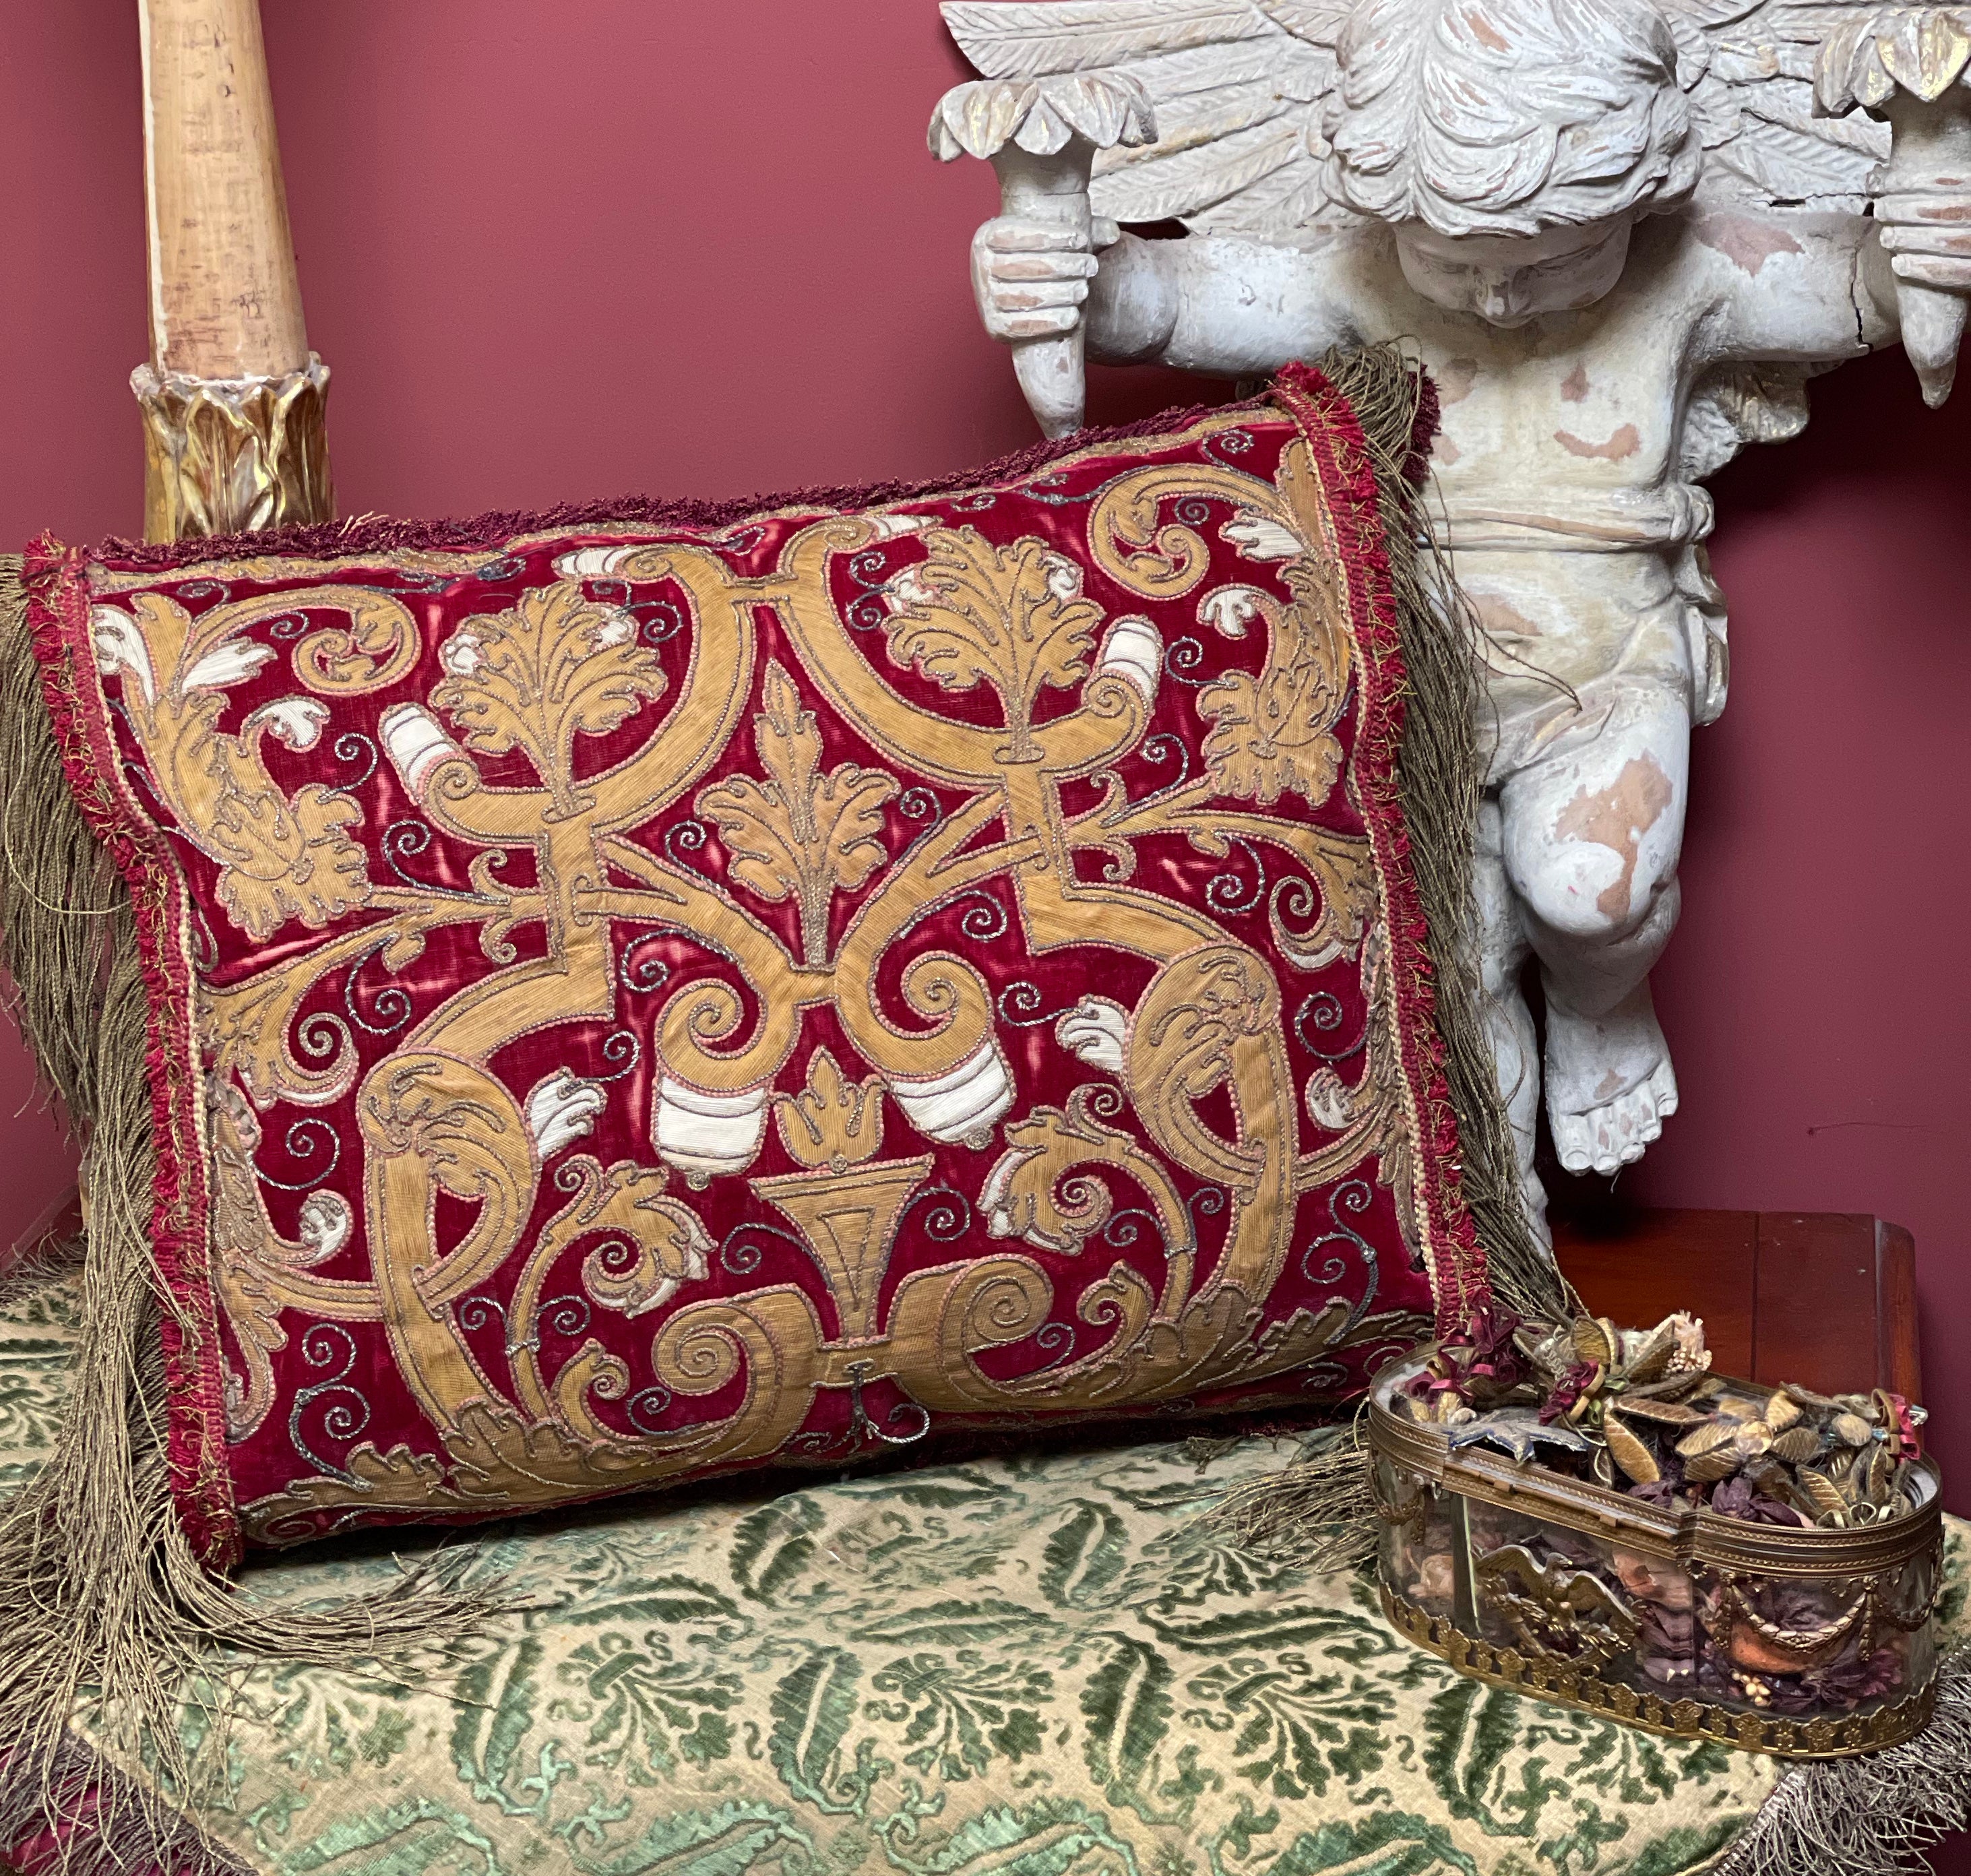 The Renaissance Pillow